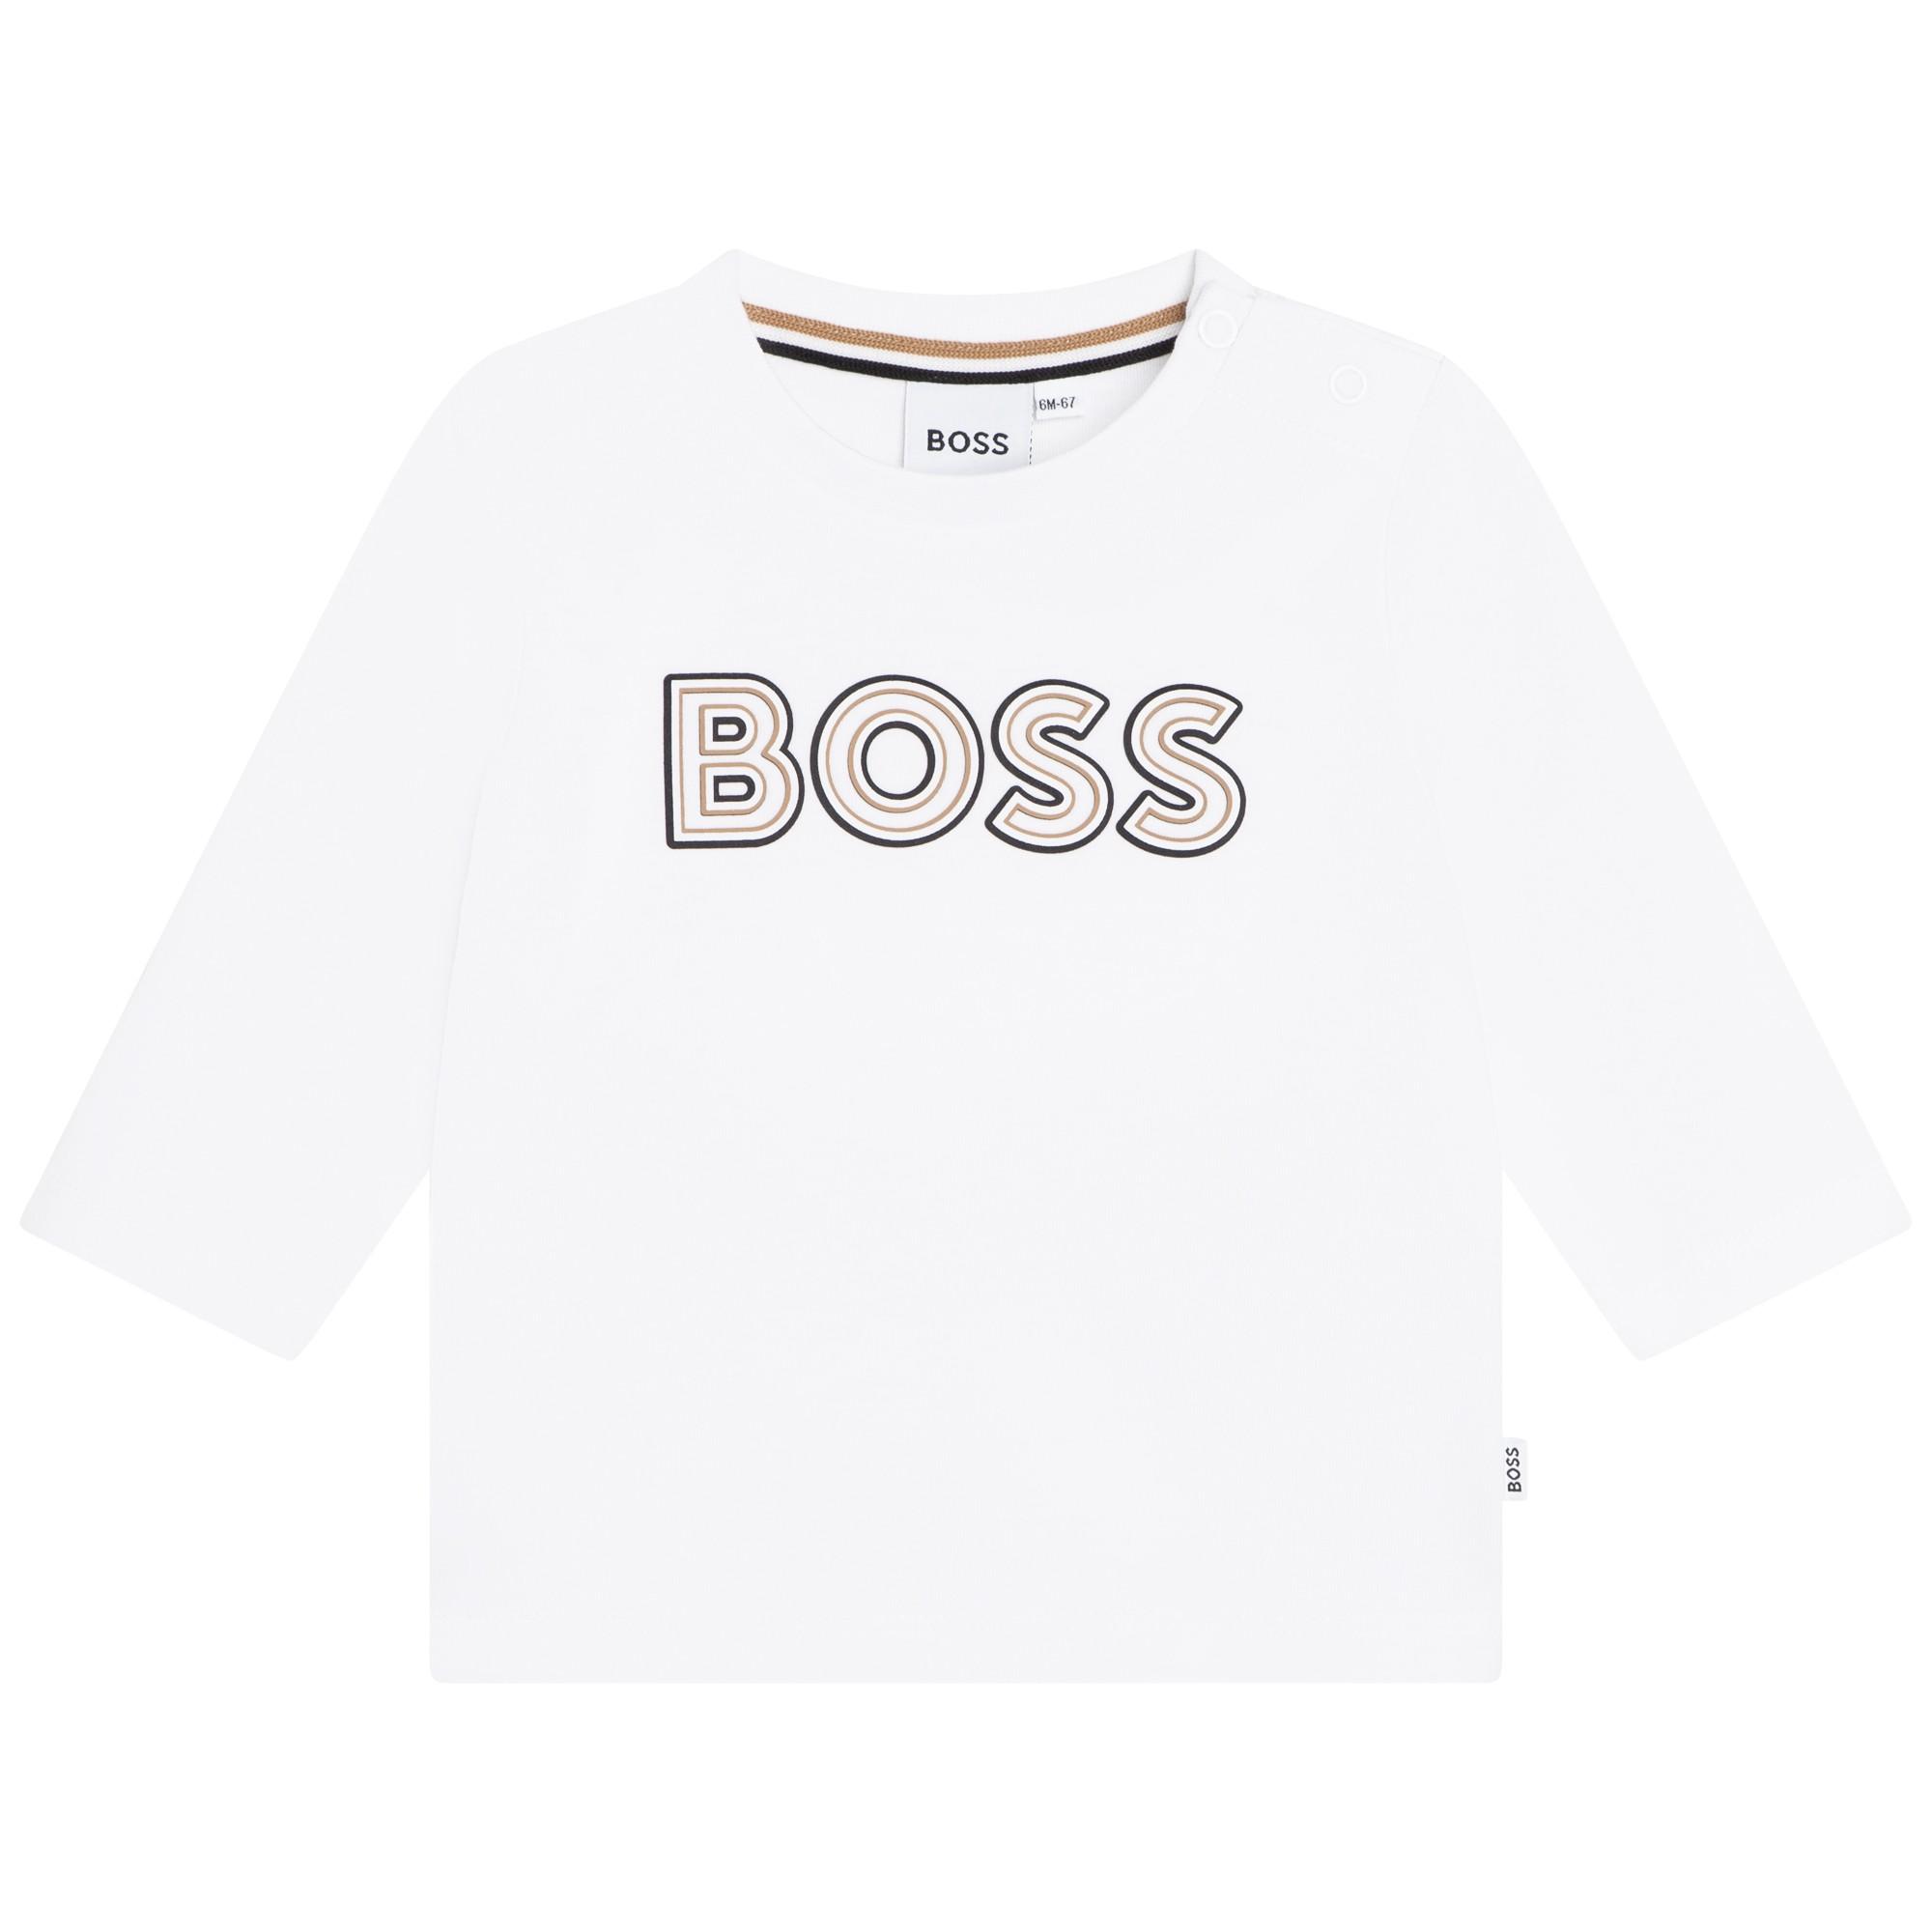 BOSS - T-shirt lange mouwen wit